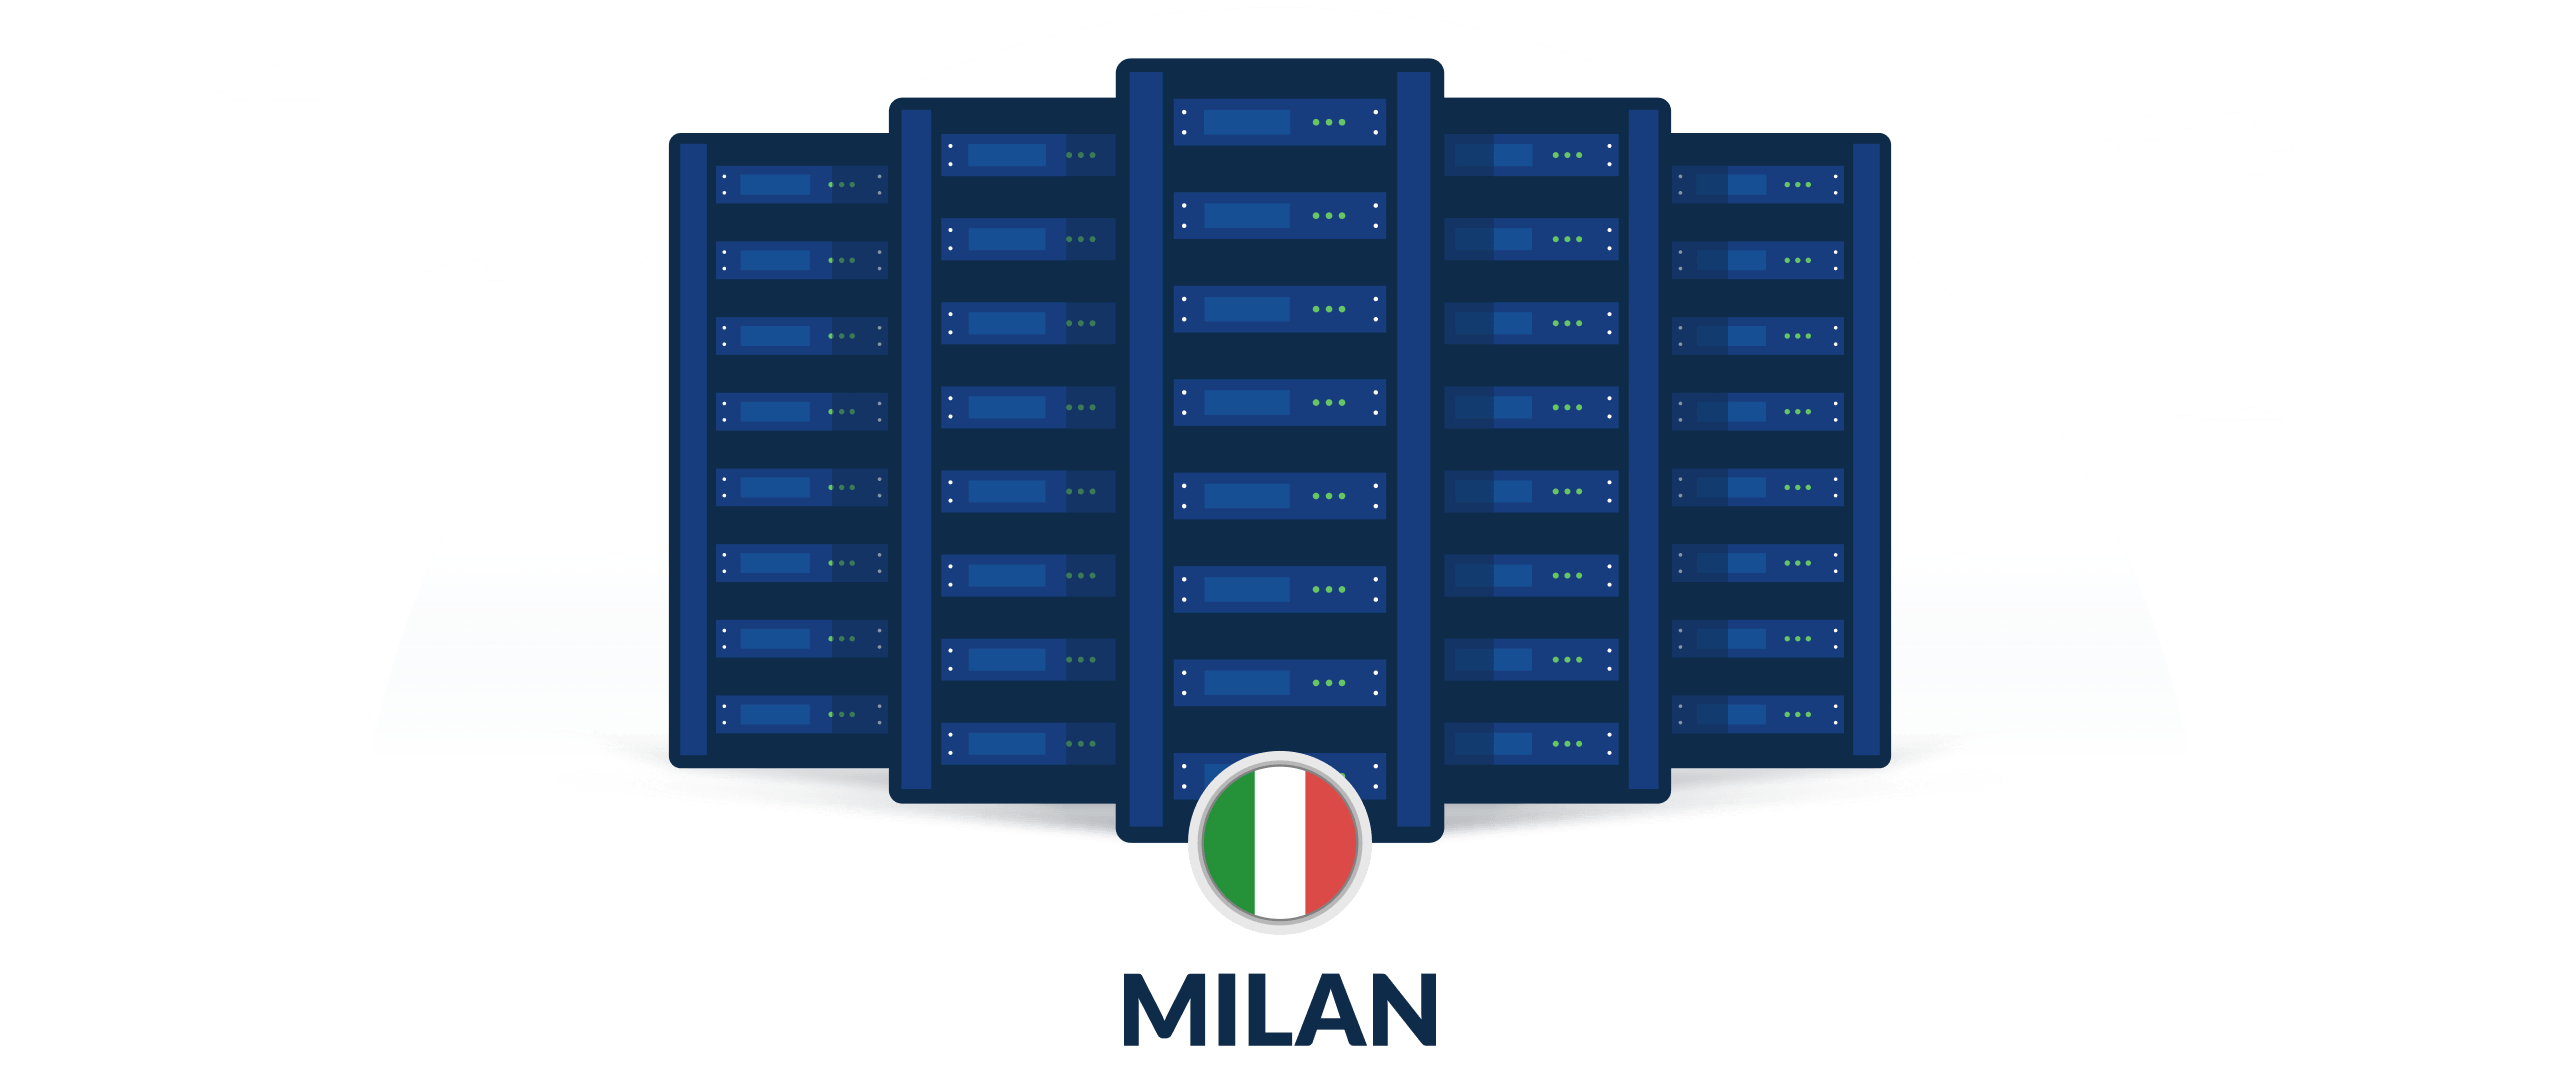 VPN servers in Milan, Italy